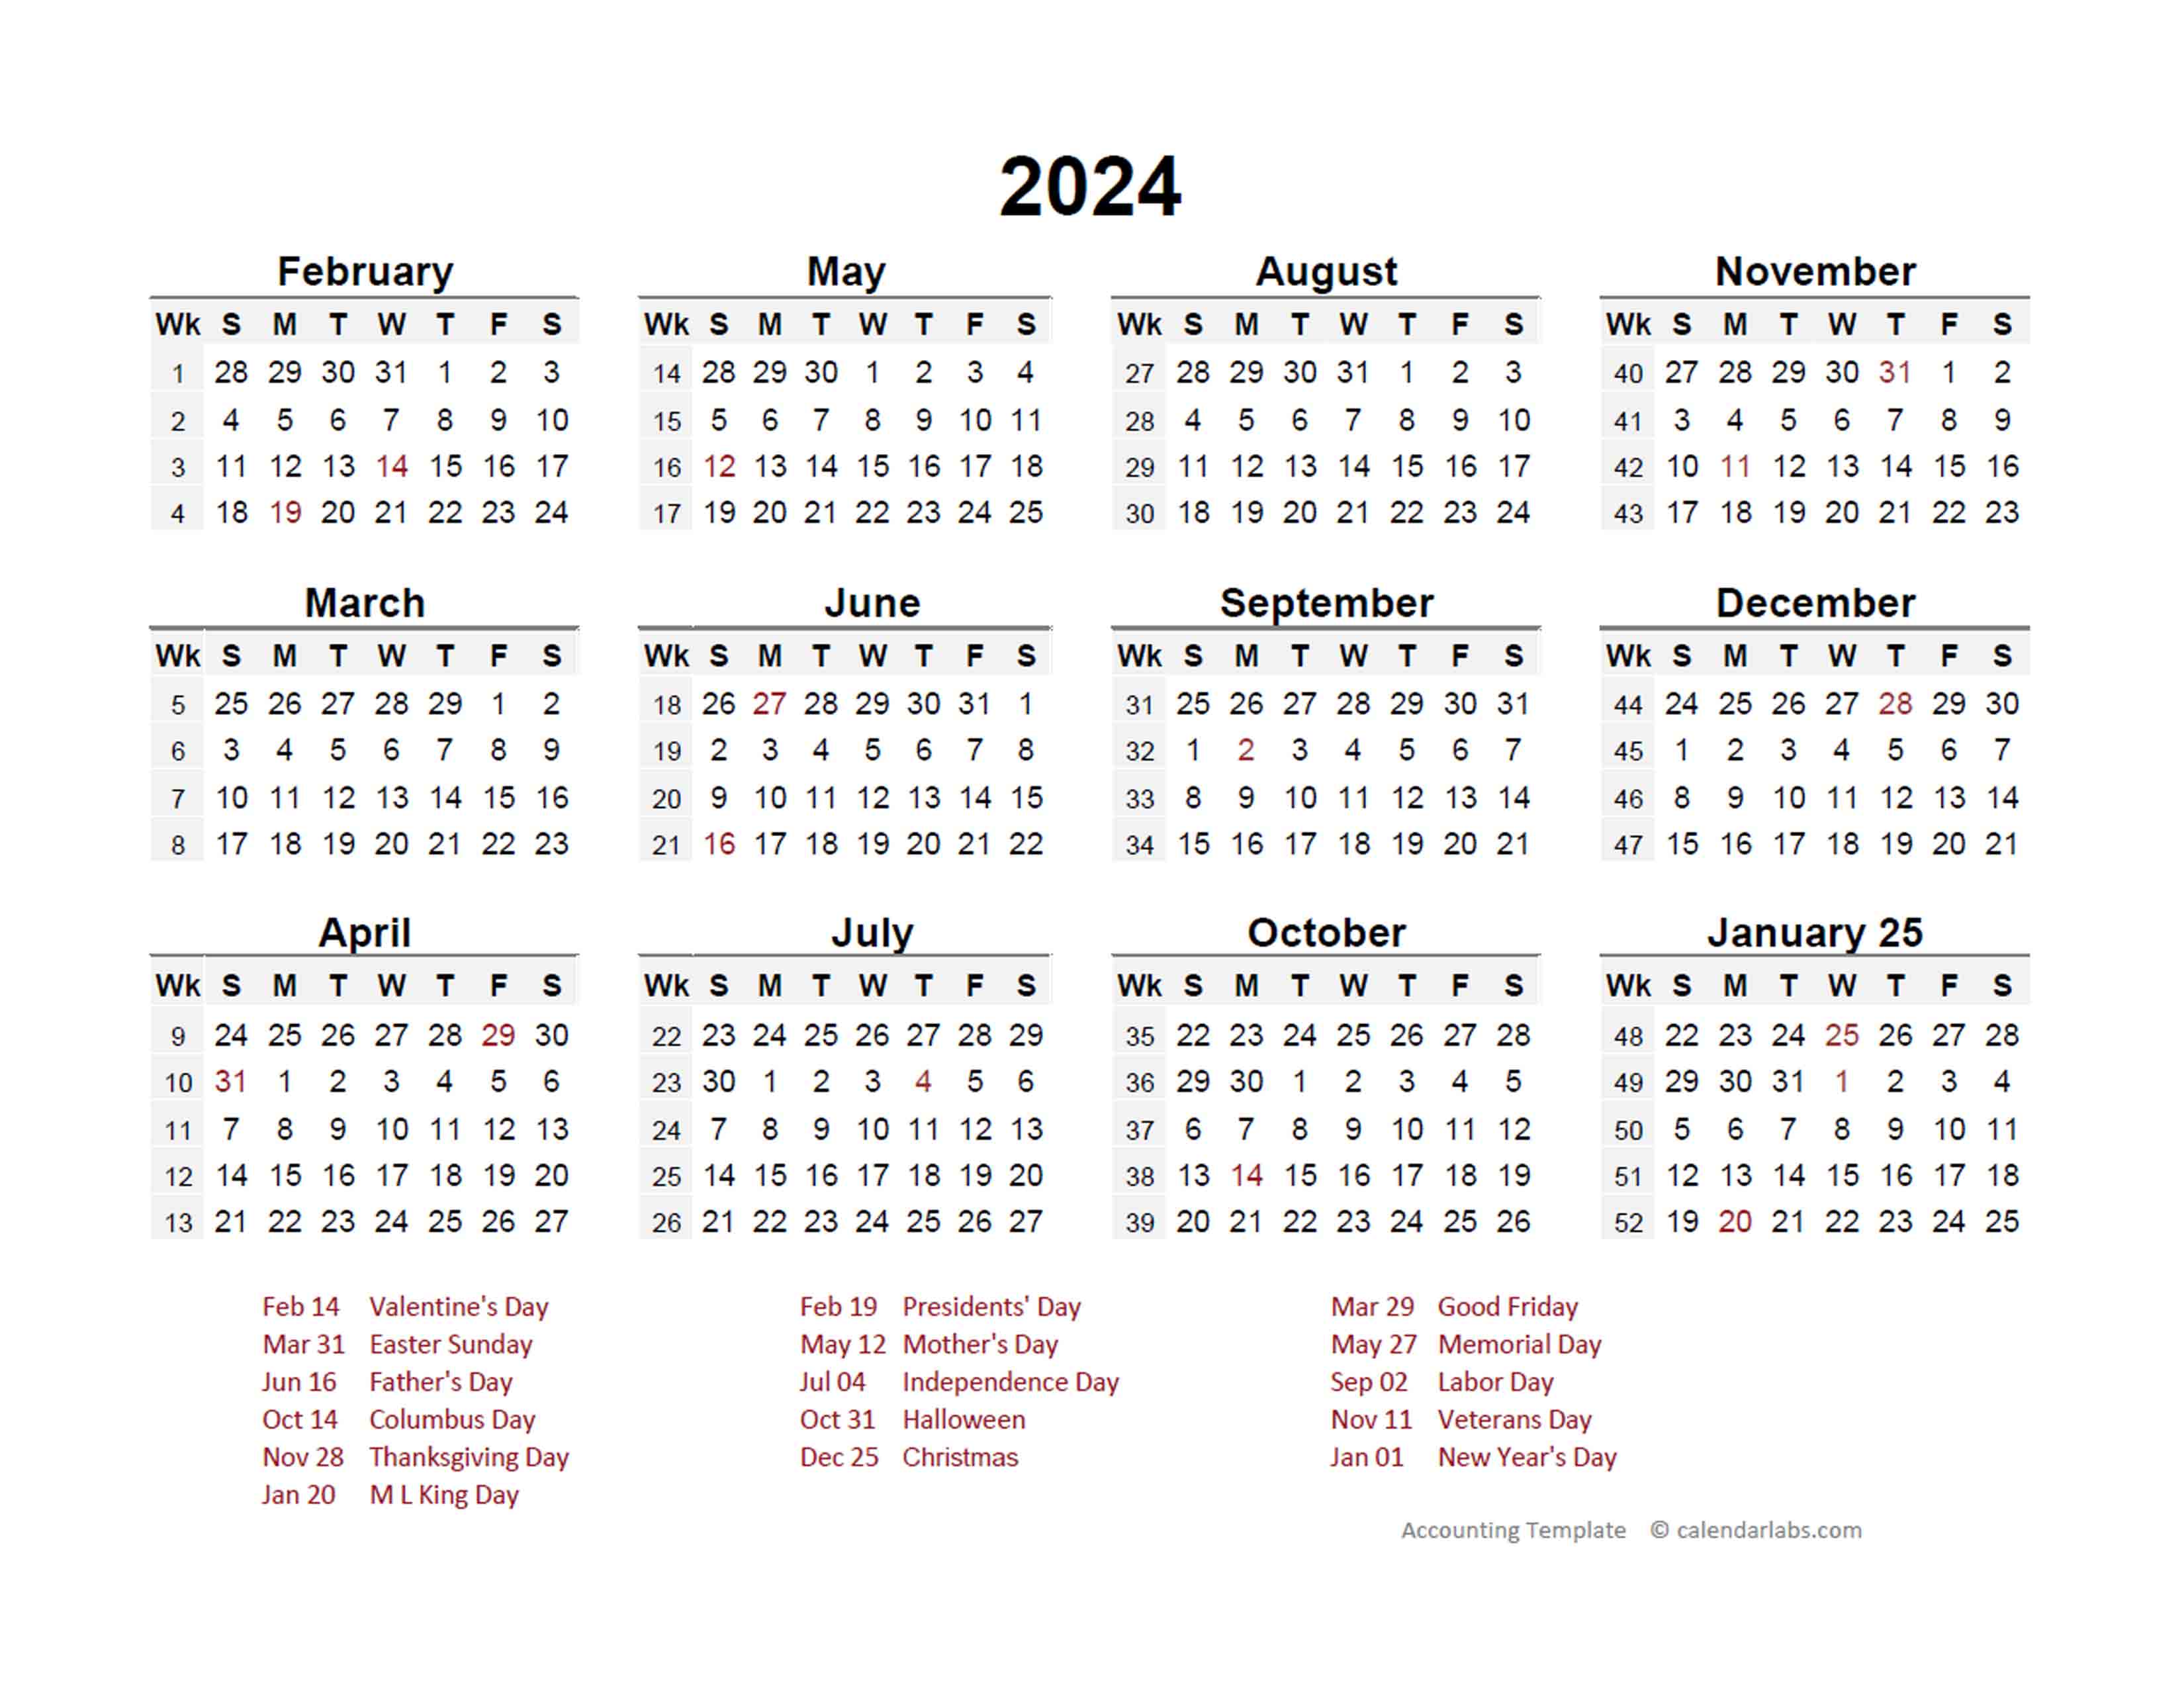 2024 Accounting Period Calendar 4 4 5 